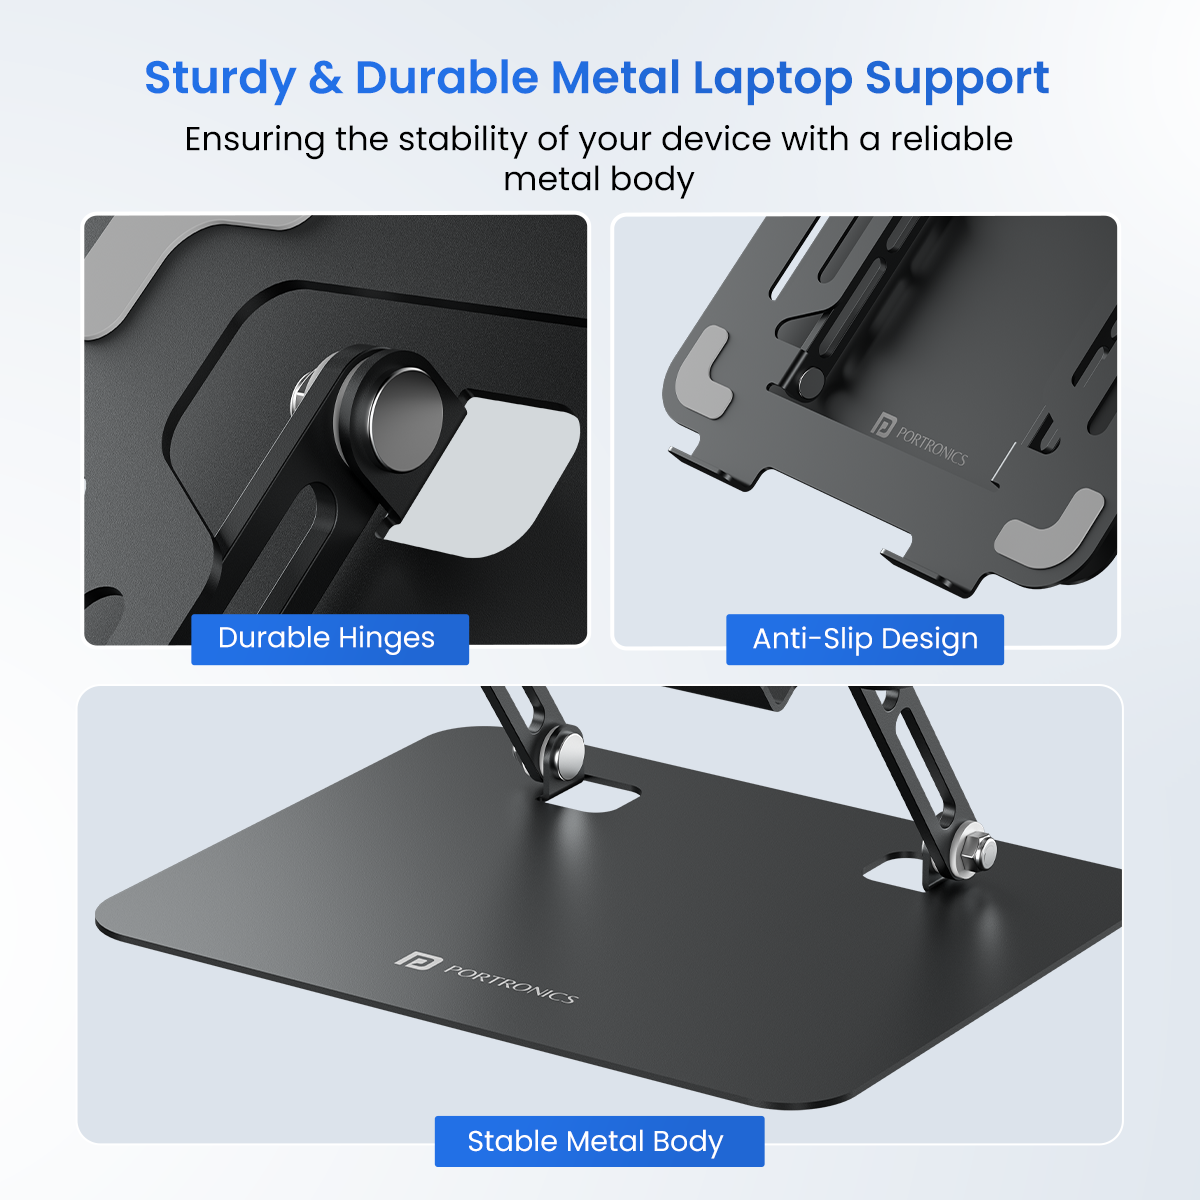 Black Portronics My Buddy K3 Pro durable metal laptop stand